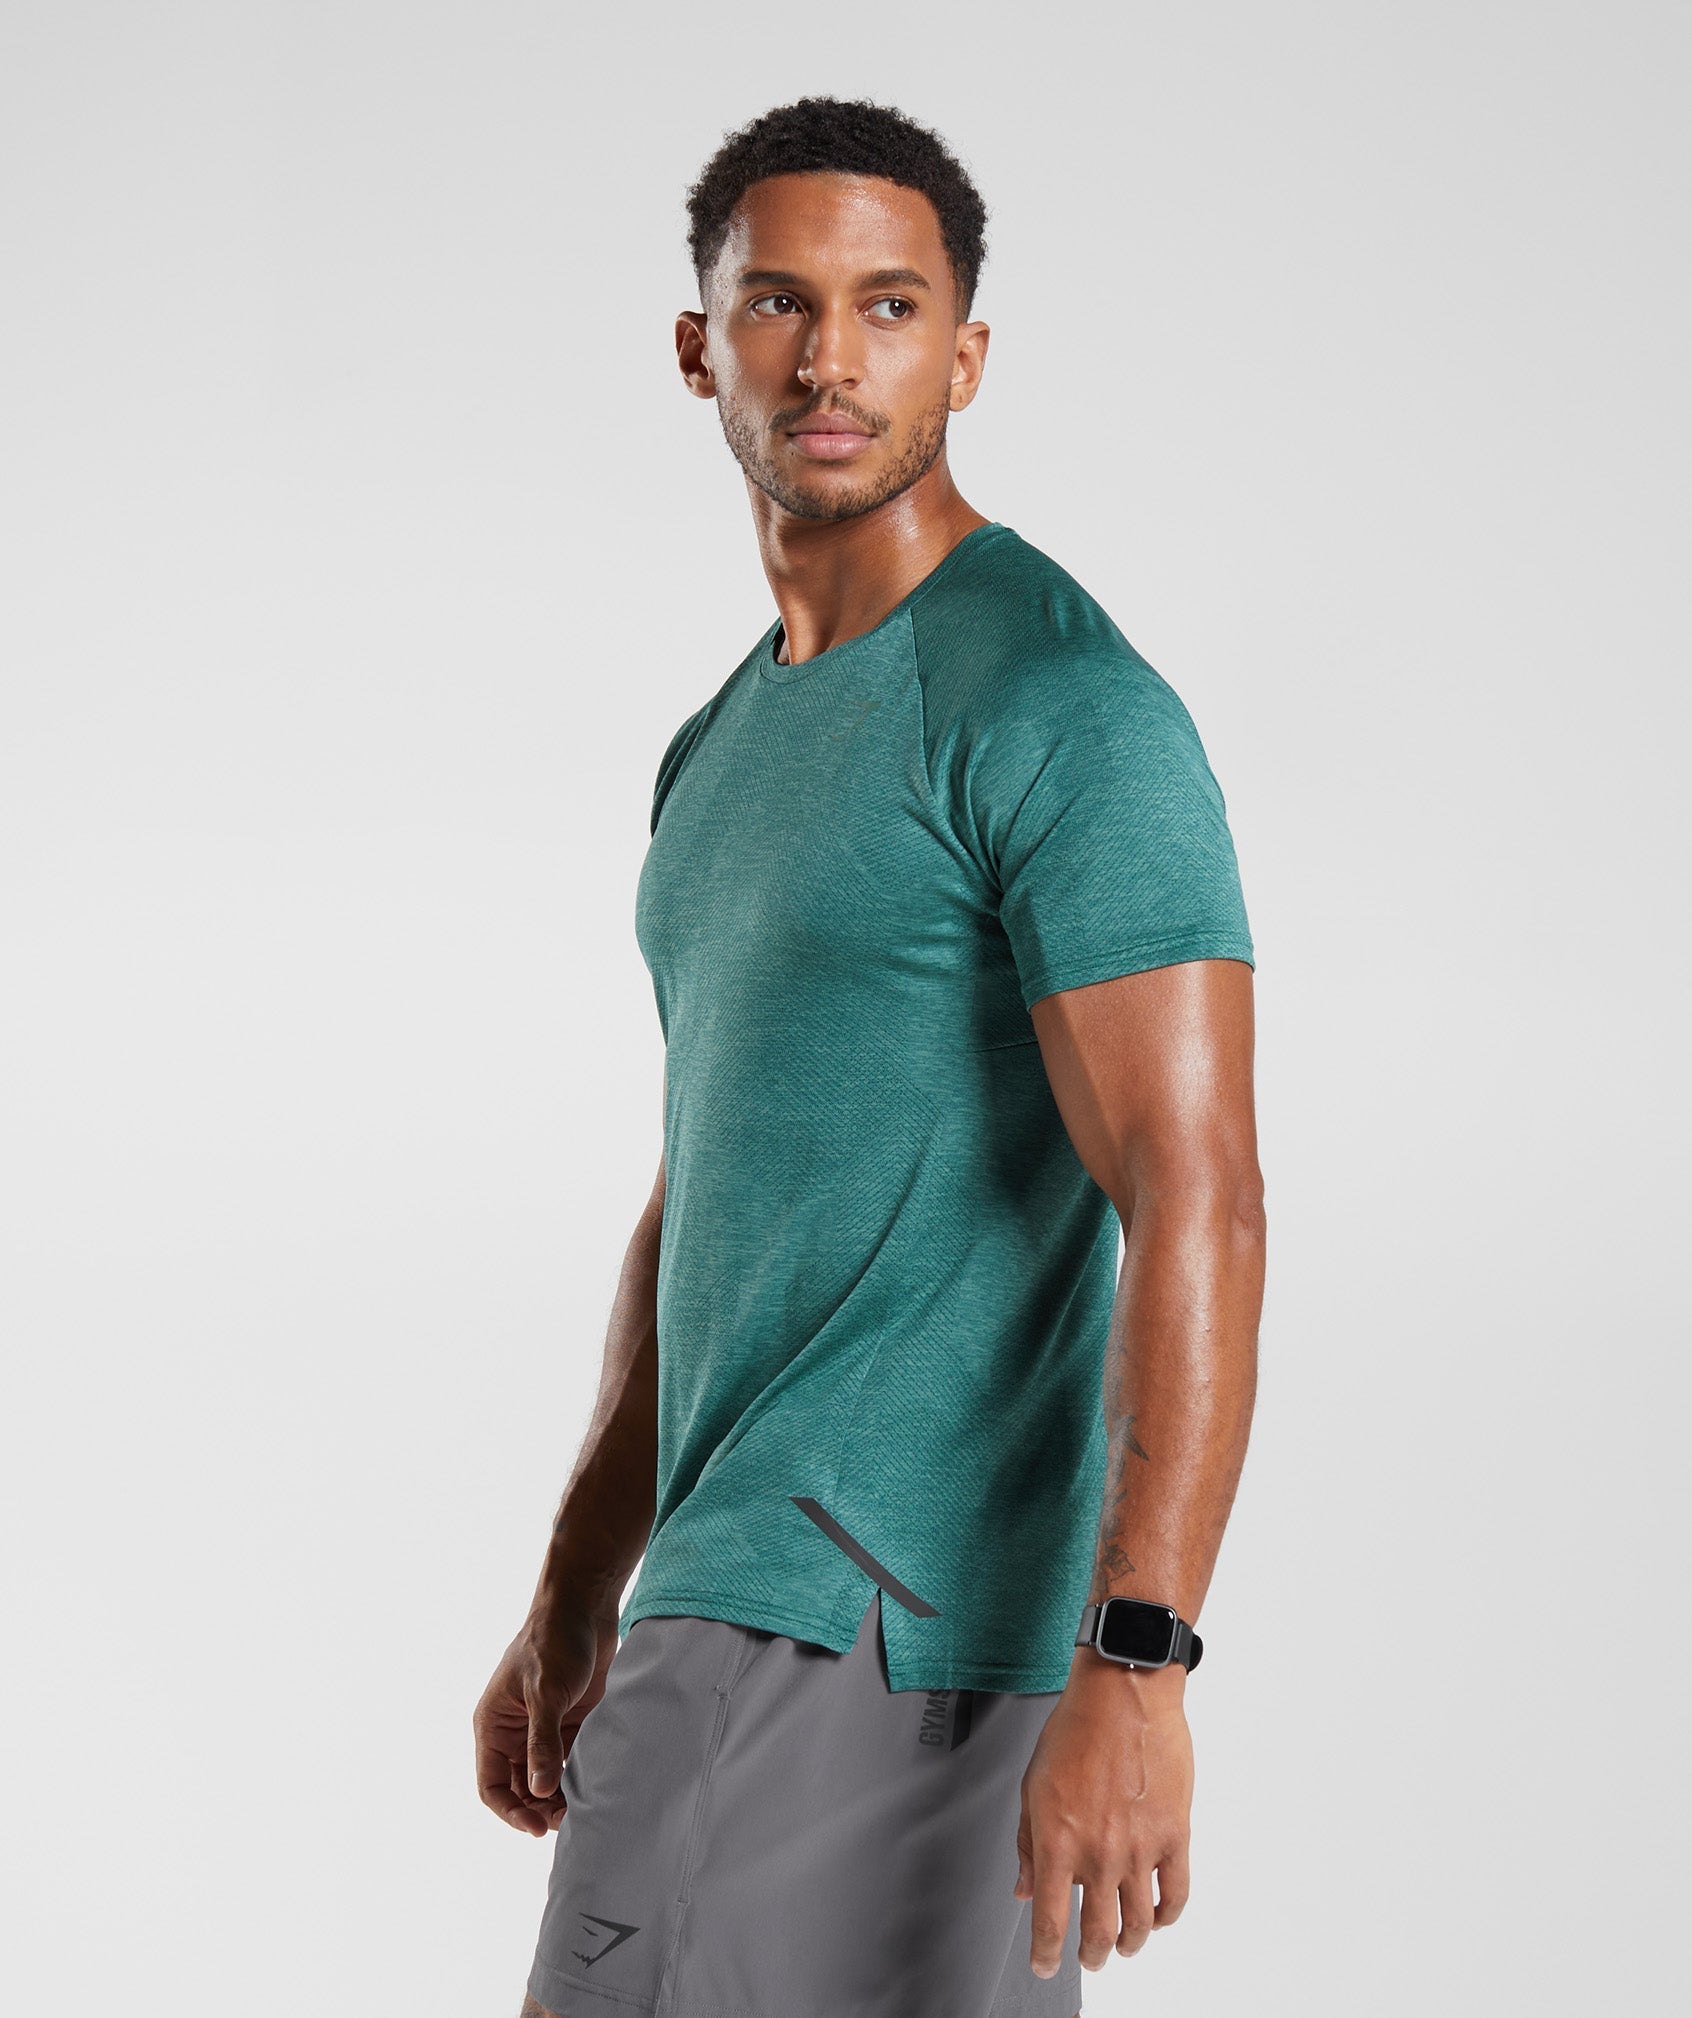 Avia Teal Green Size Medium Shirt Activewear Short Sleeve Workout